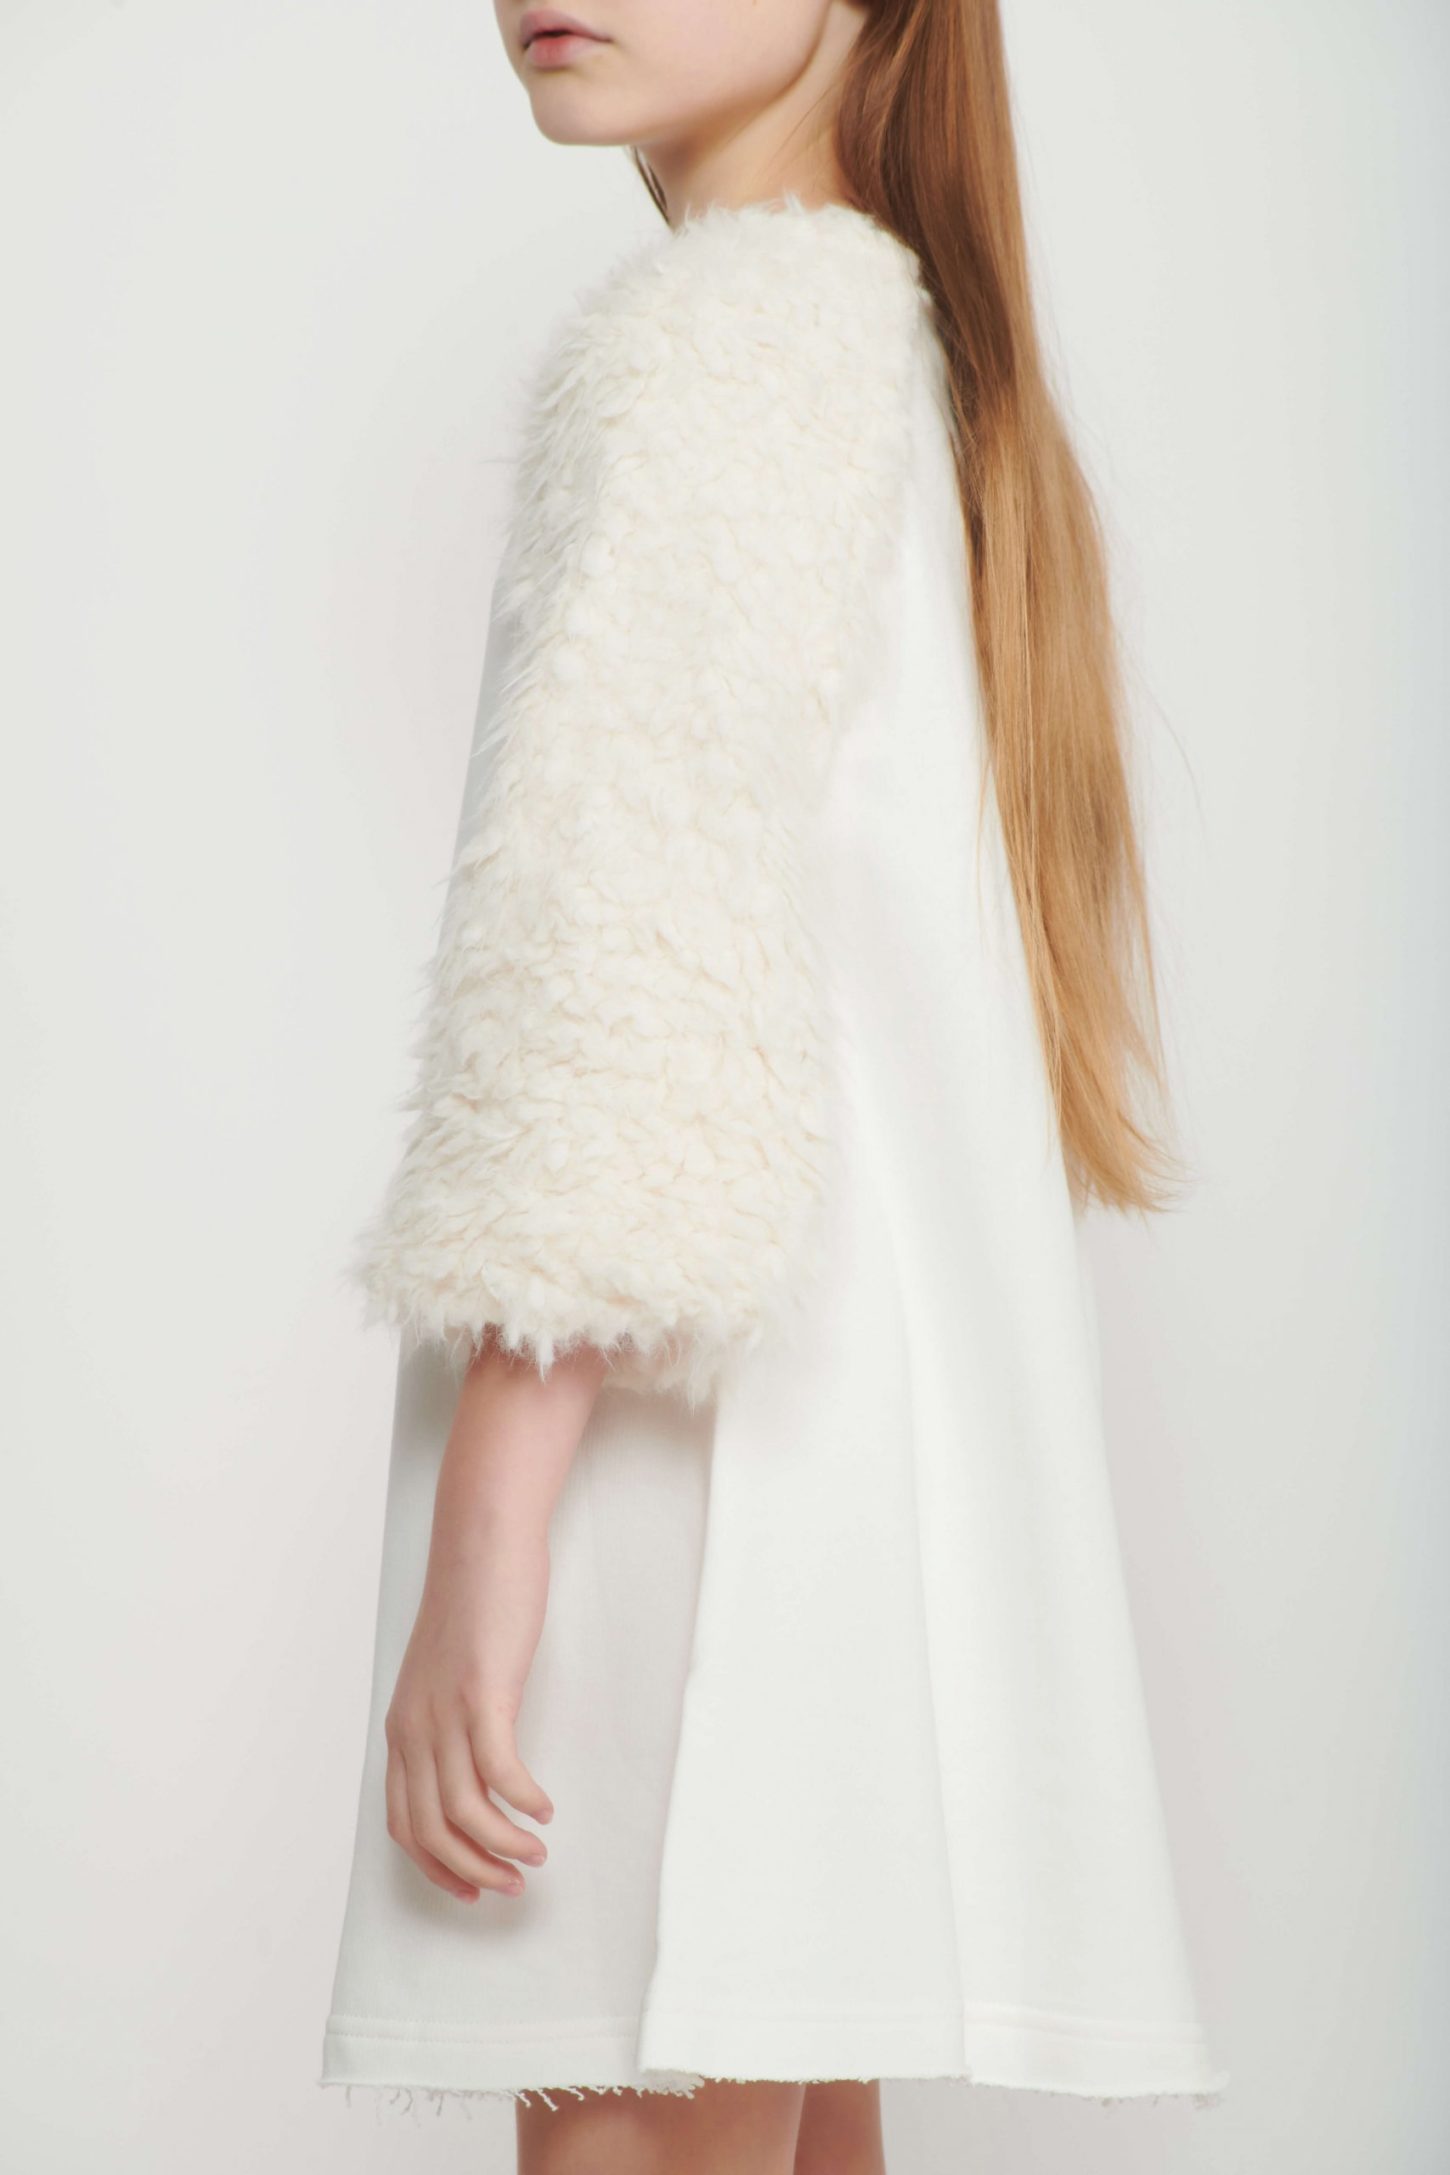 White A-Line Fur Dress for Girls